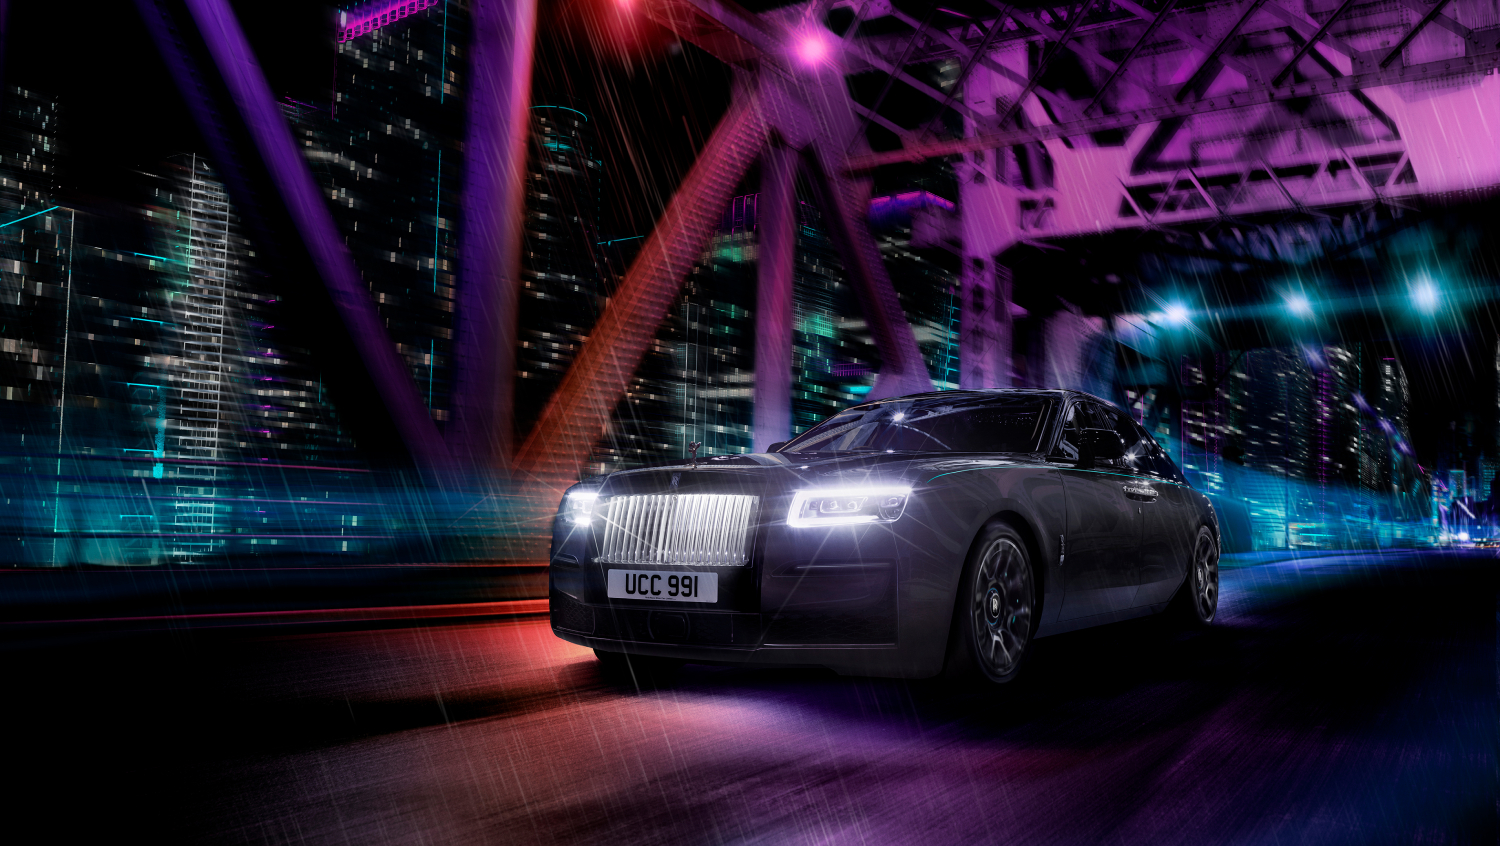 The new Rolls-Royce Black Badge Ghost